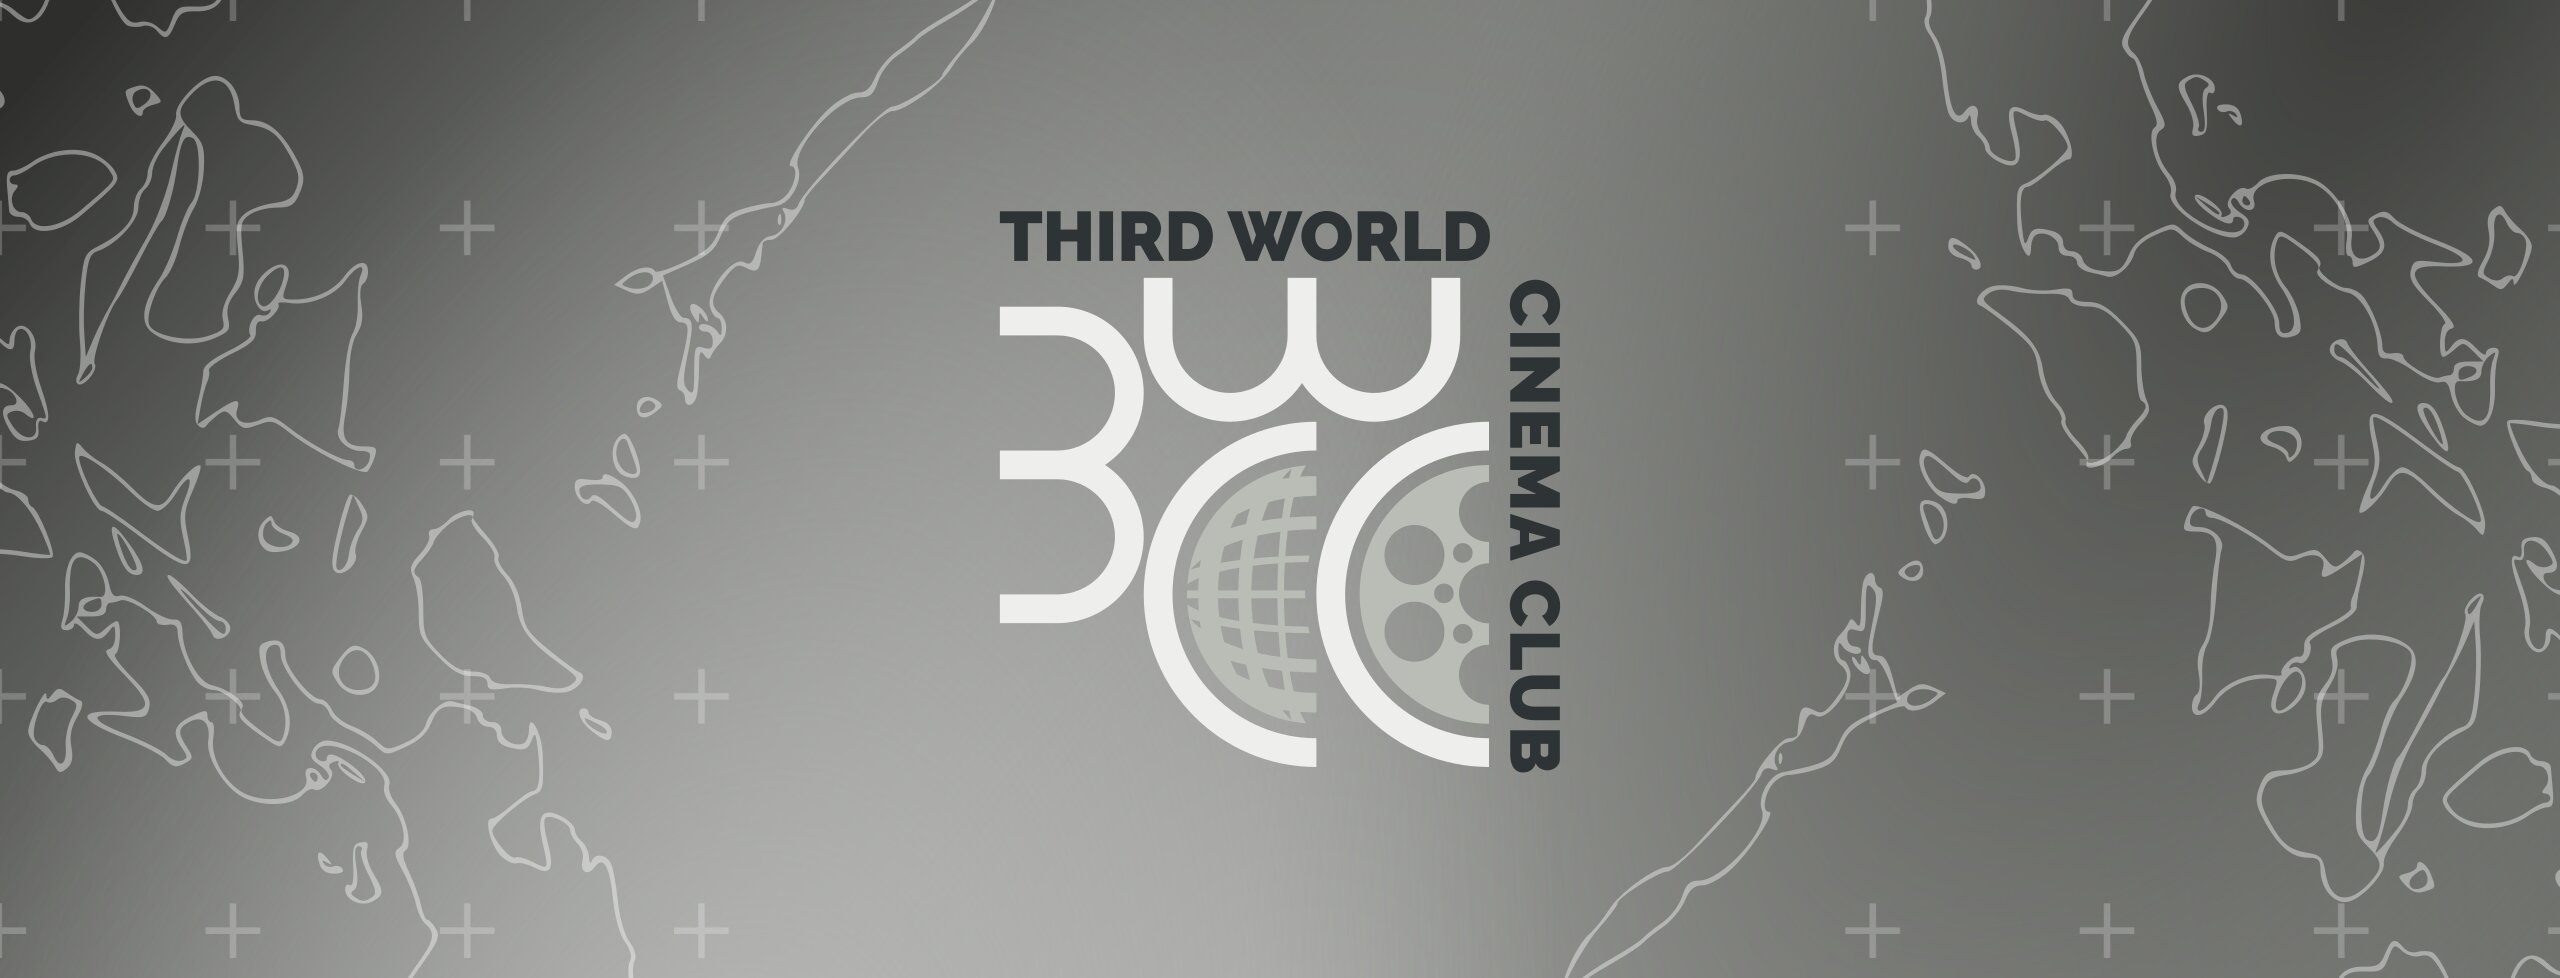 Third World Cinema Club by FPR, a podcast about Philippine cinema